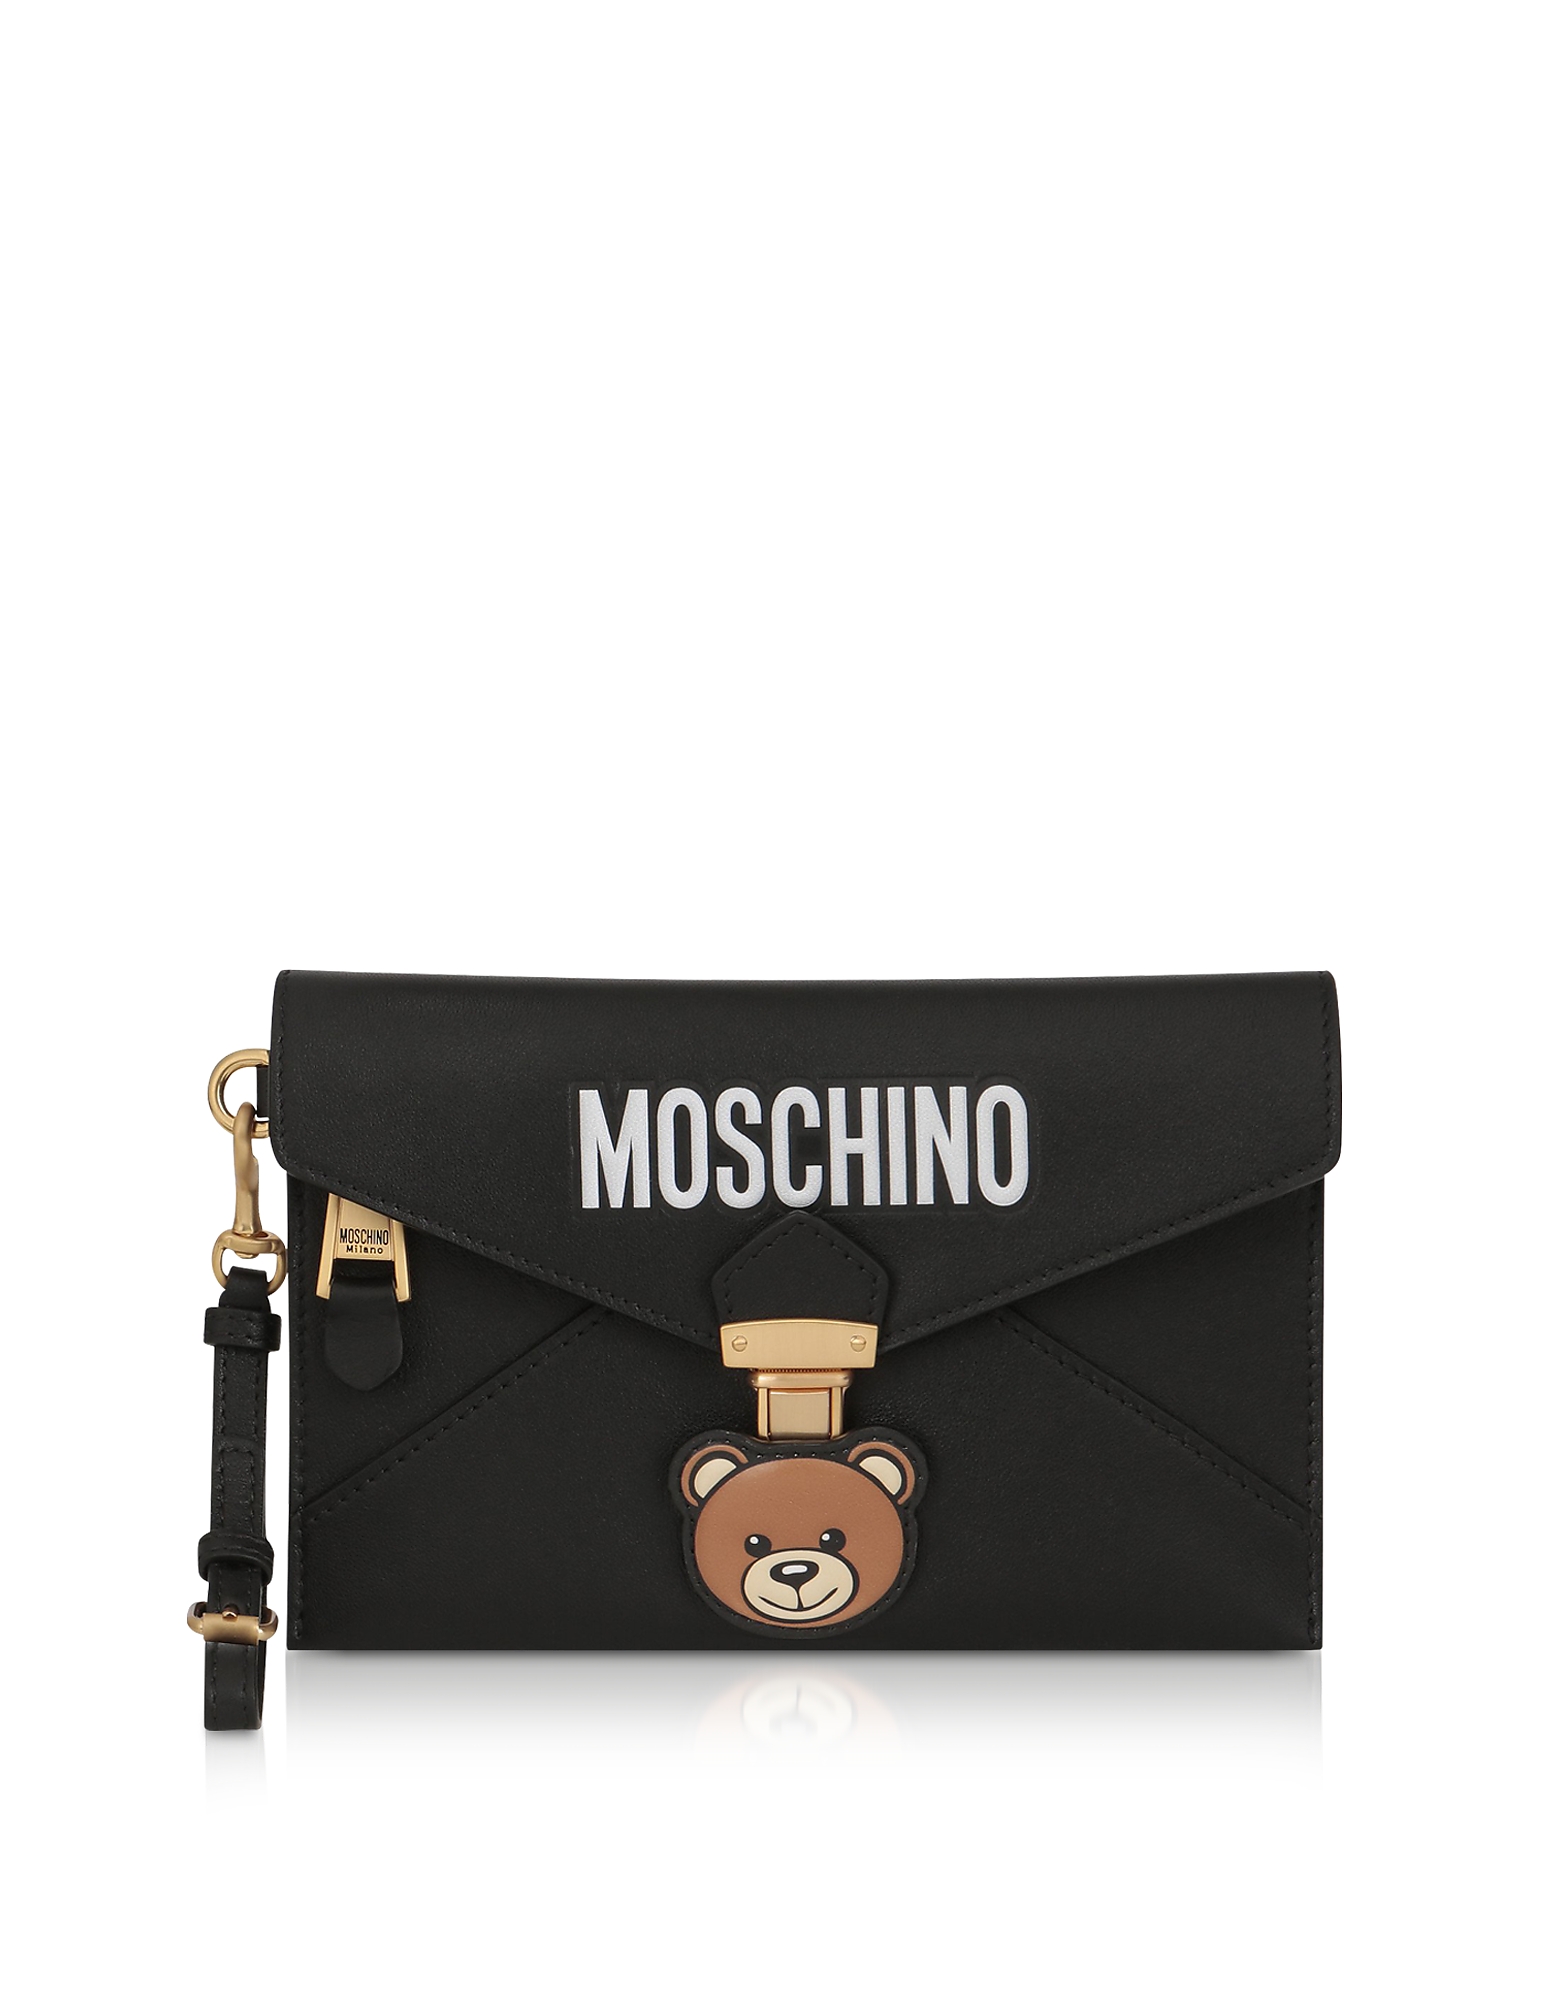 UPC 820771814008 product image for Moschino Designer Handbags, Teddy Bear Black Leather Clutch w/Wristlet | upcitemdb.com